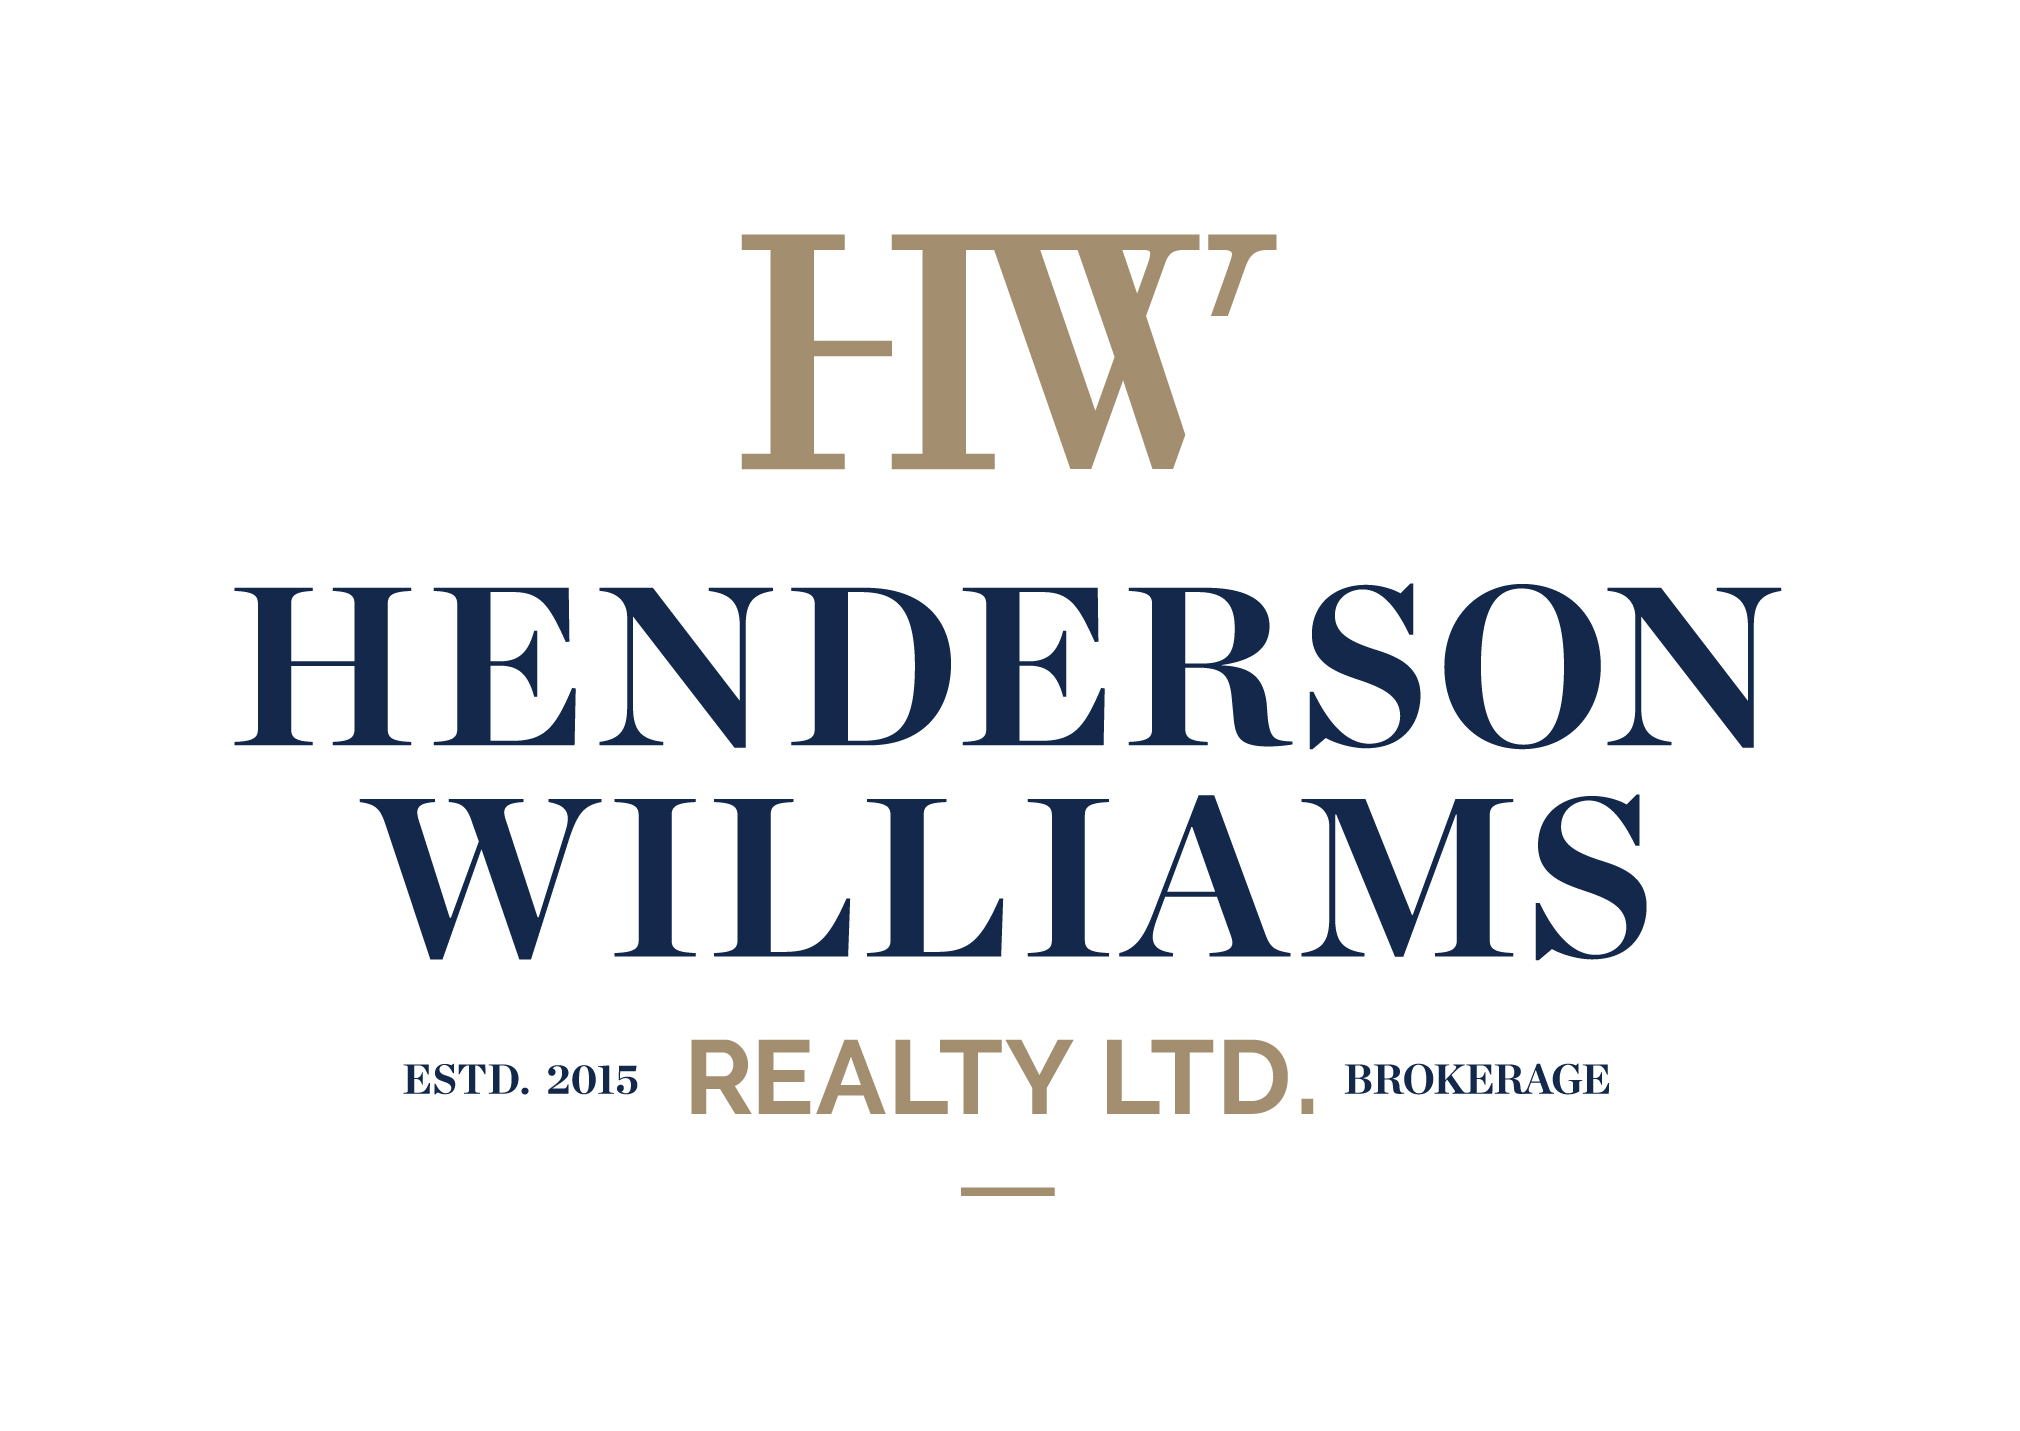 Henderson William Realty Ltd.